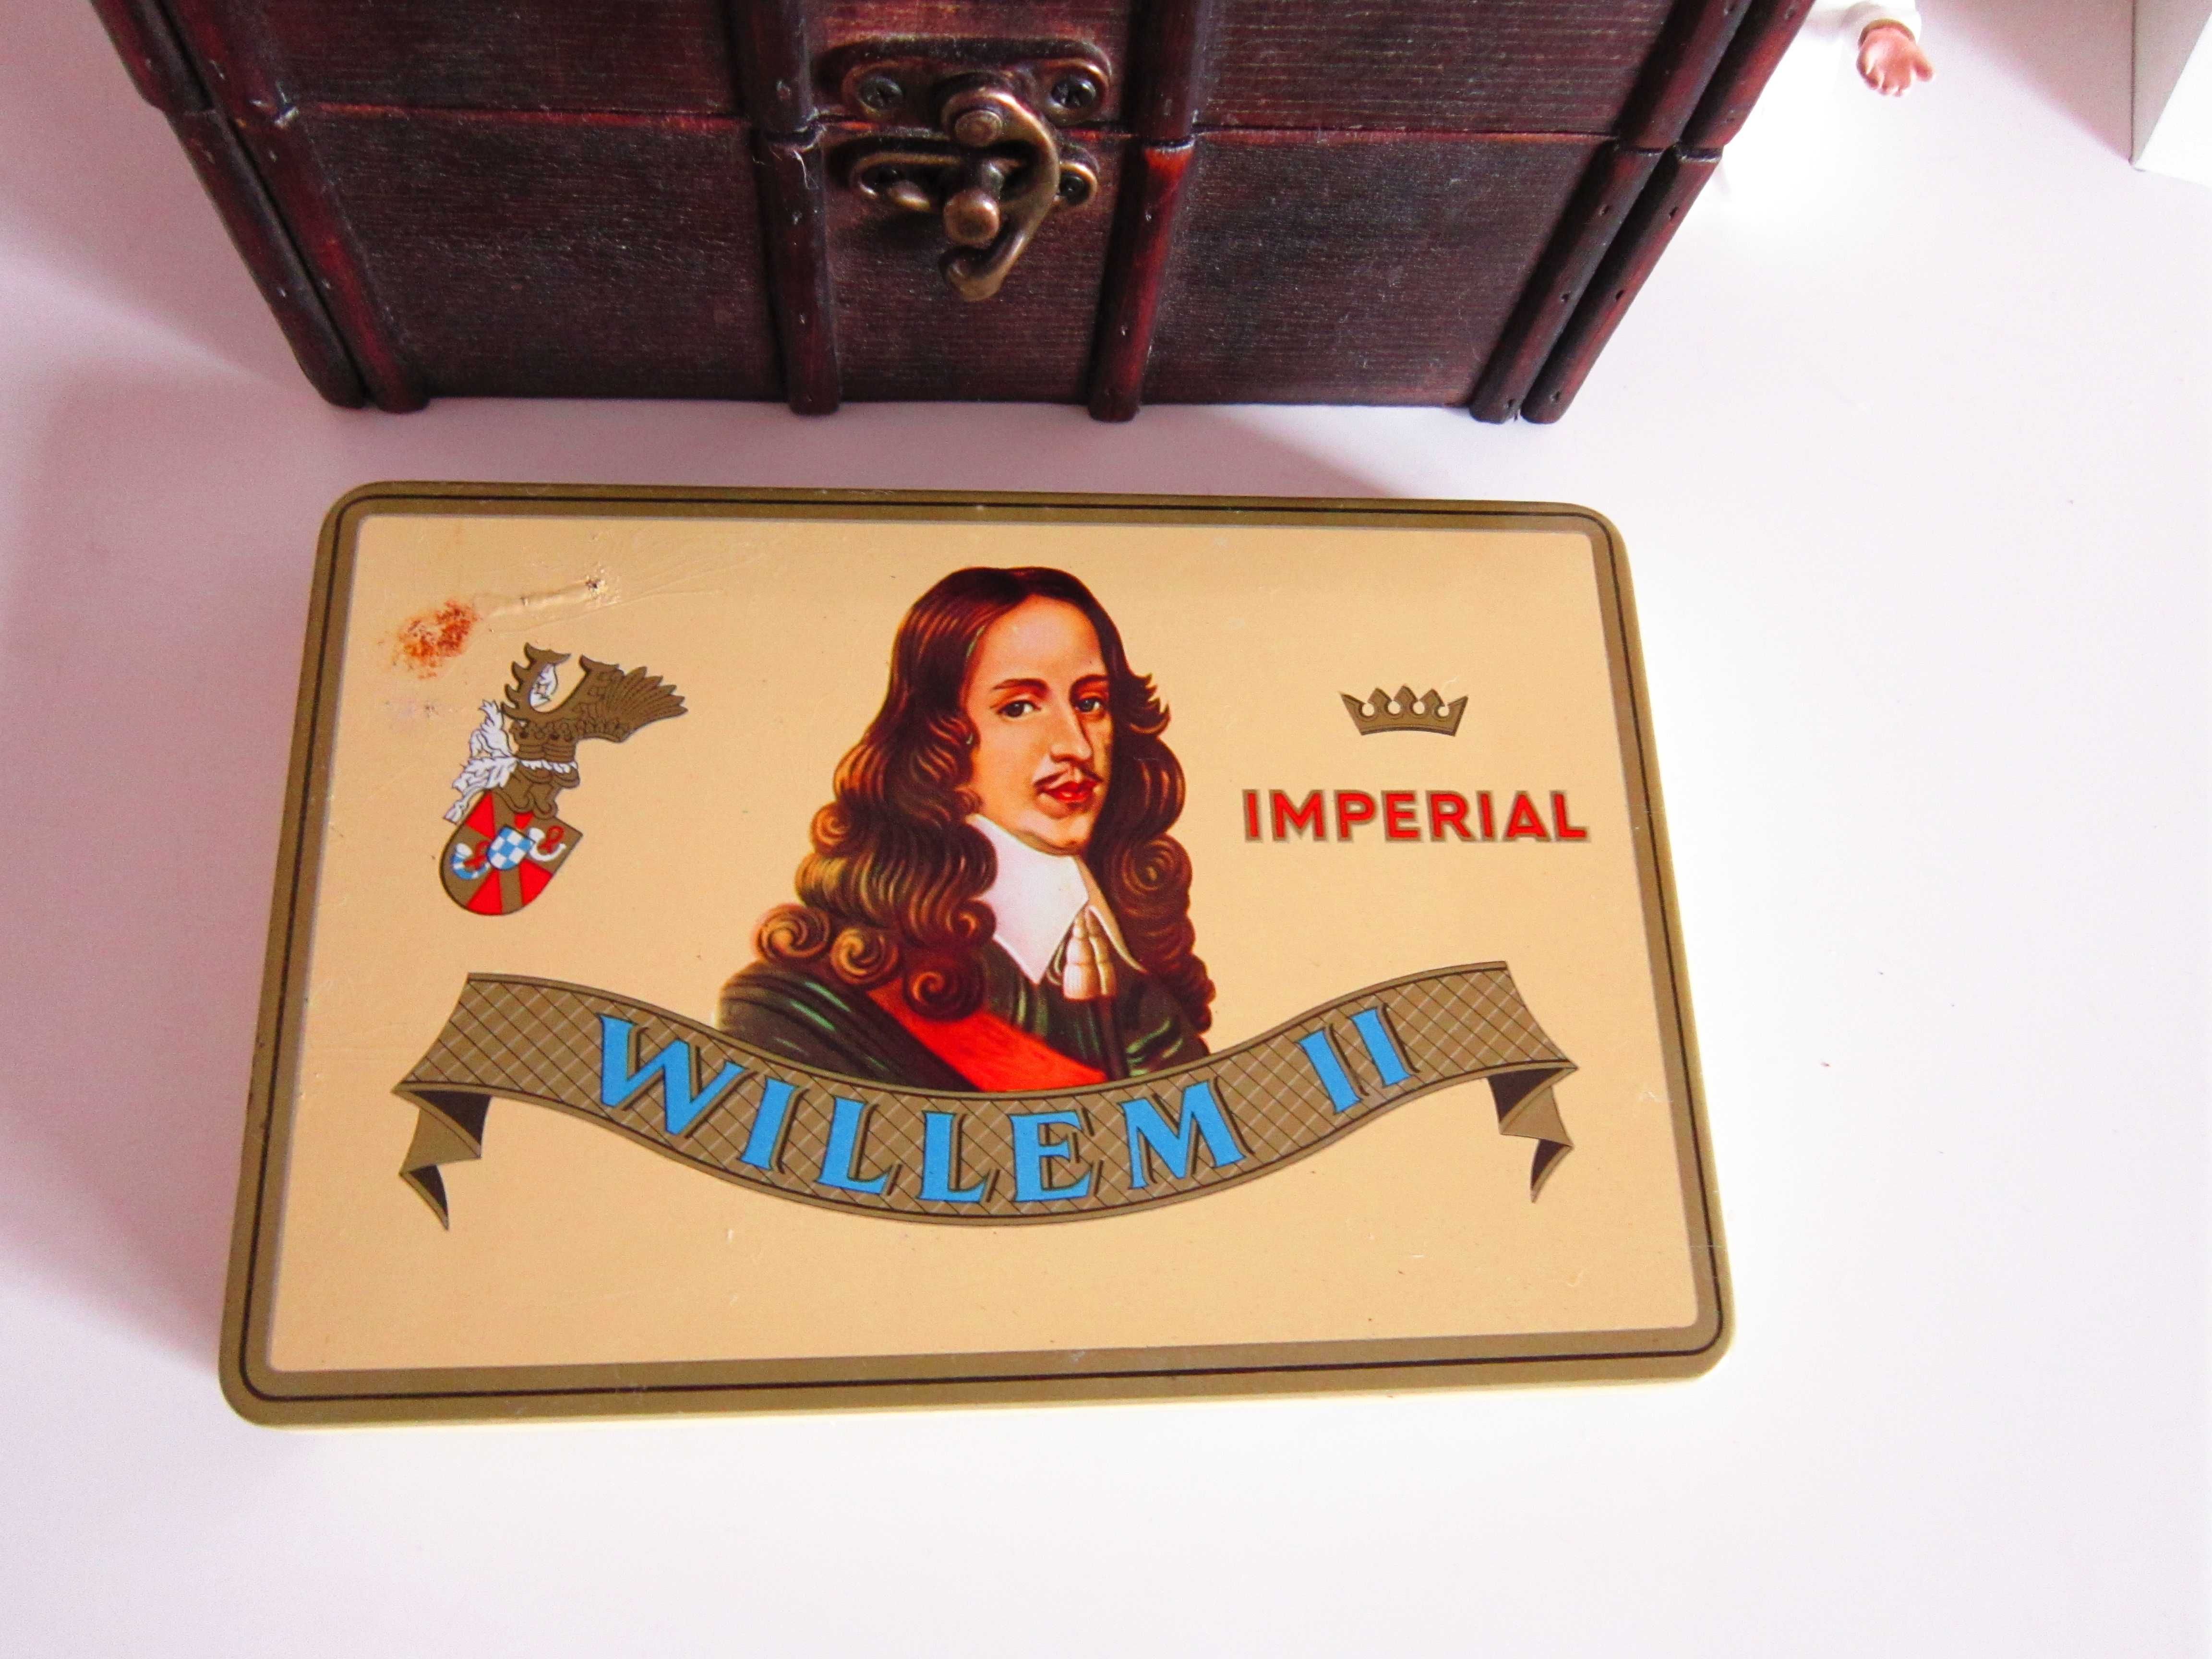 cutie metalica vintage ambalaj  trabucuri tigari Willem II Olanda